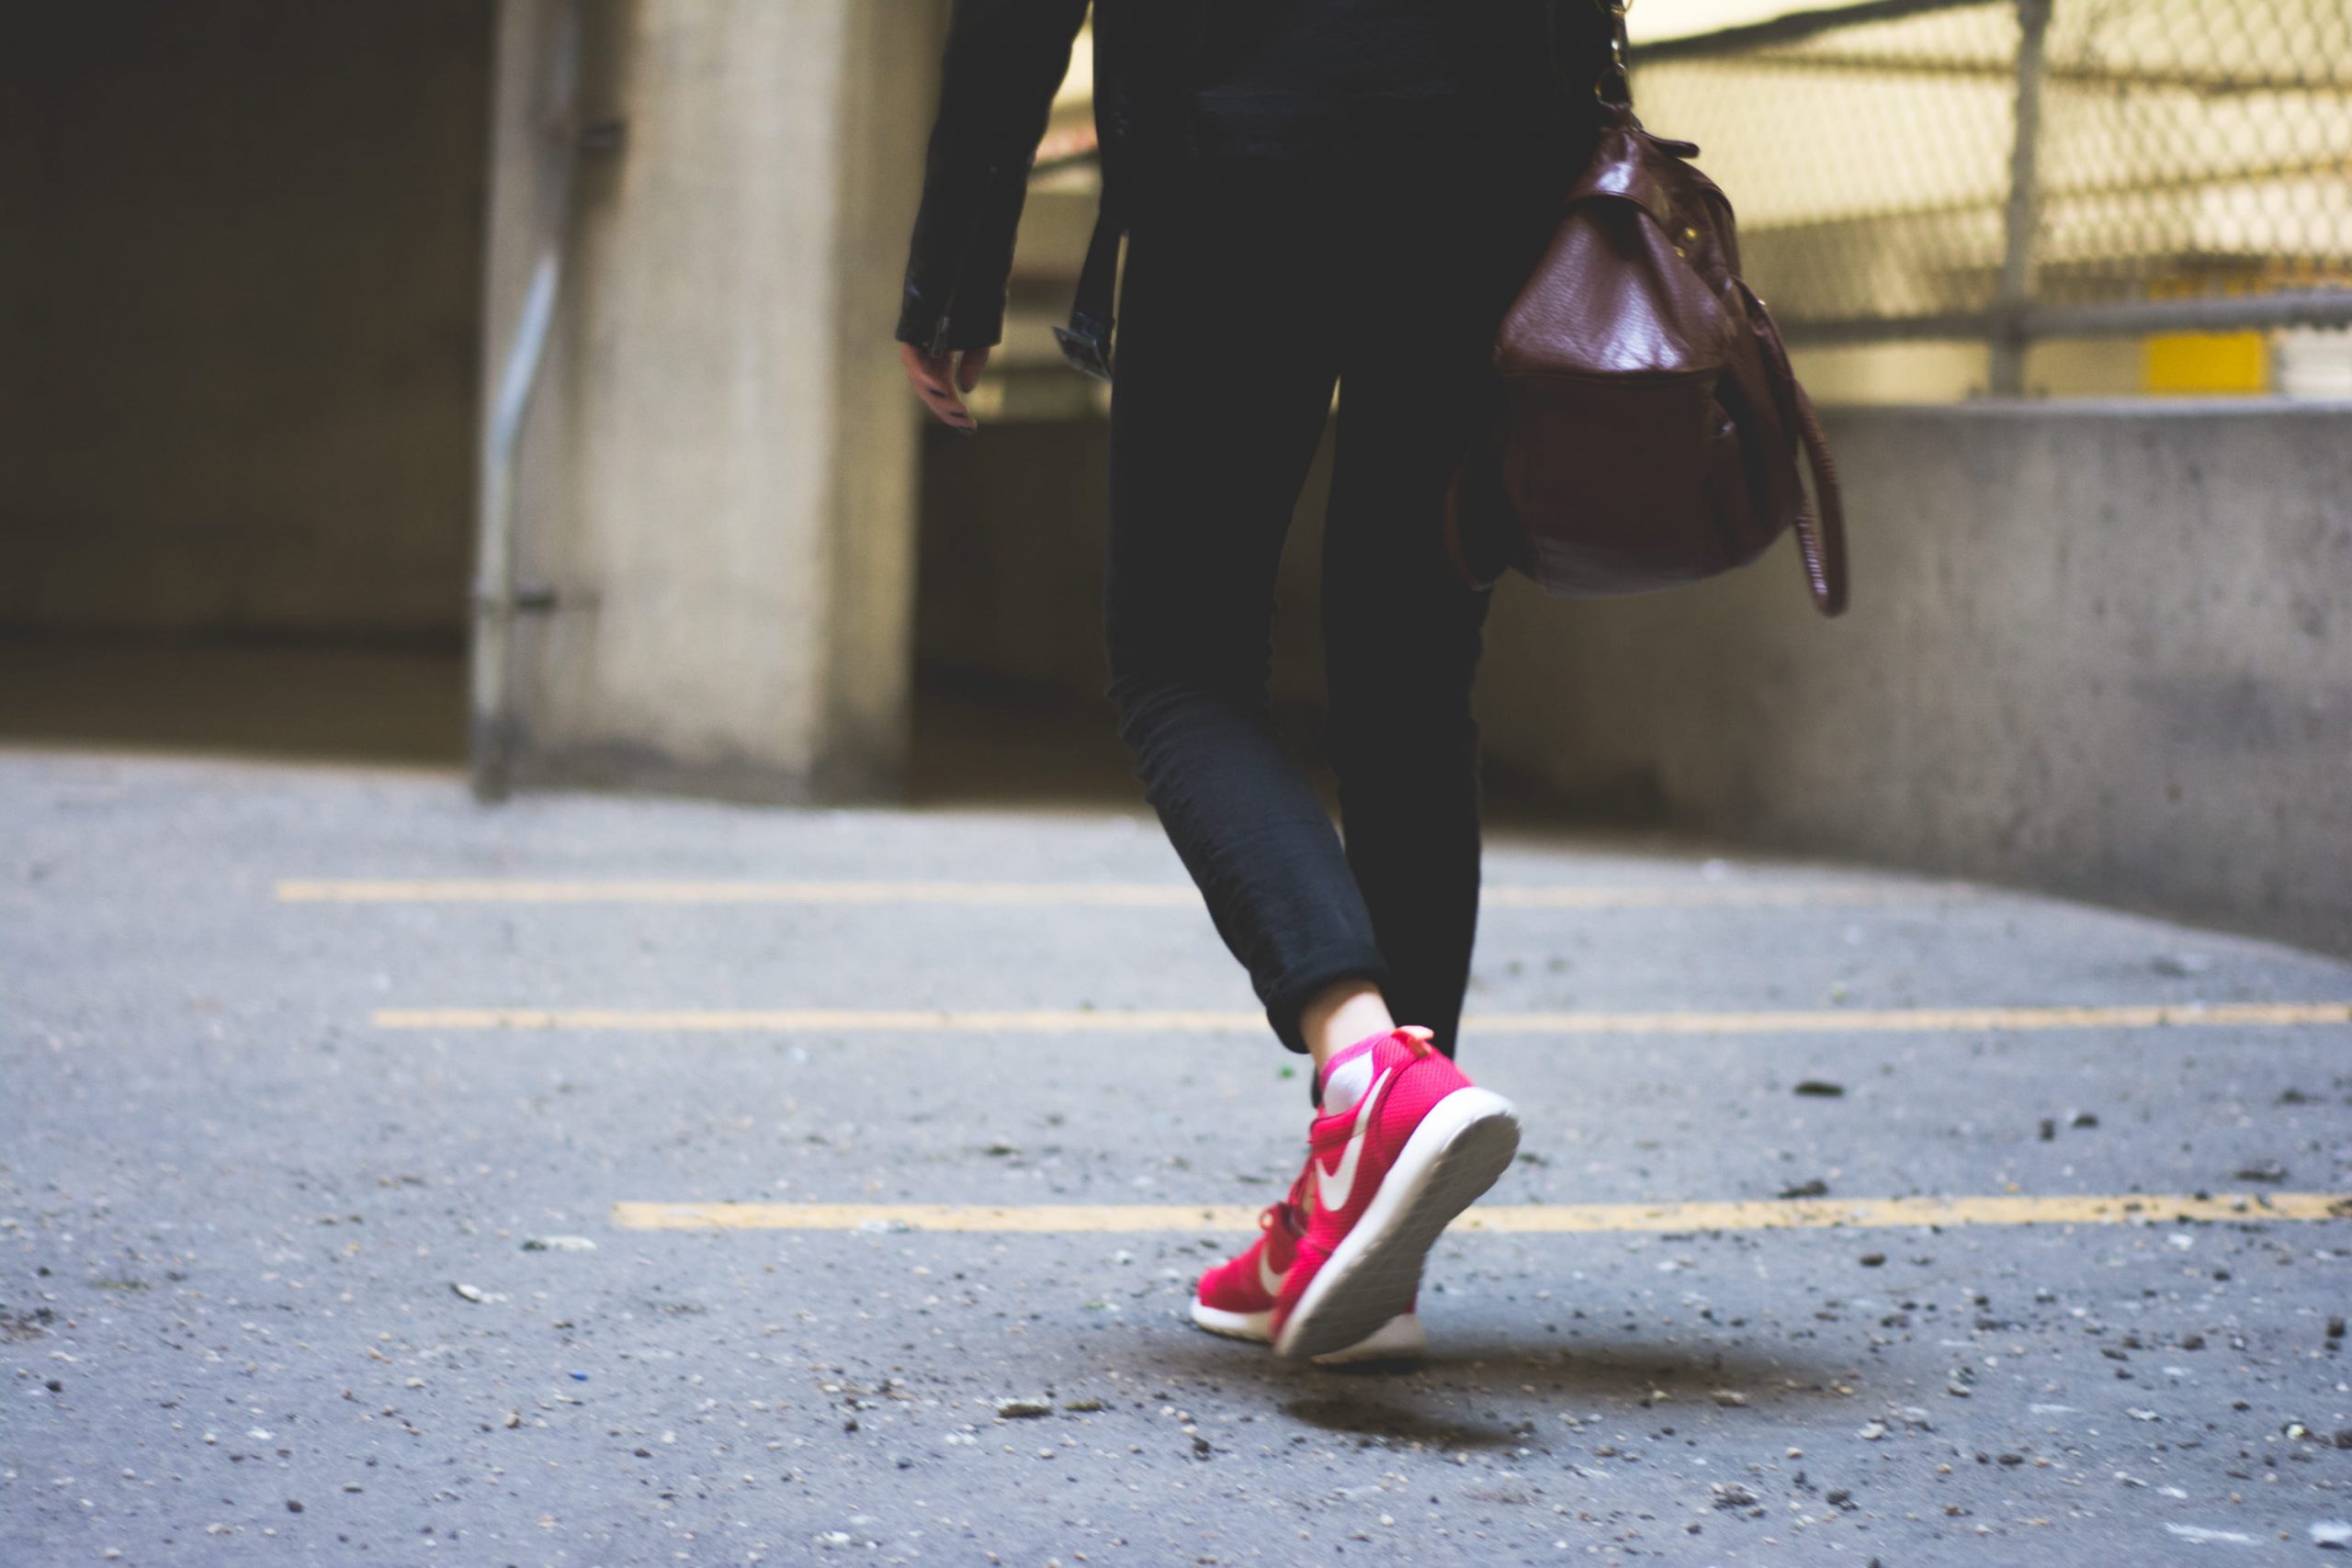 Wallpaper person wearing Nike running shoes walking along the path, woman walking on road near fence